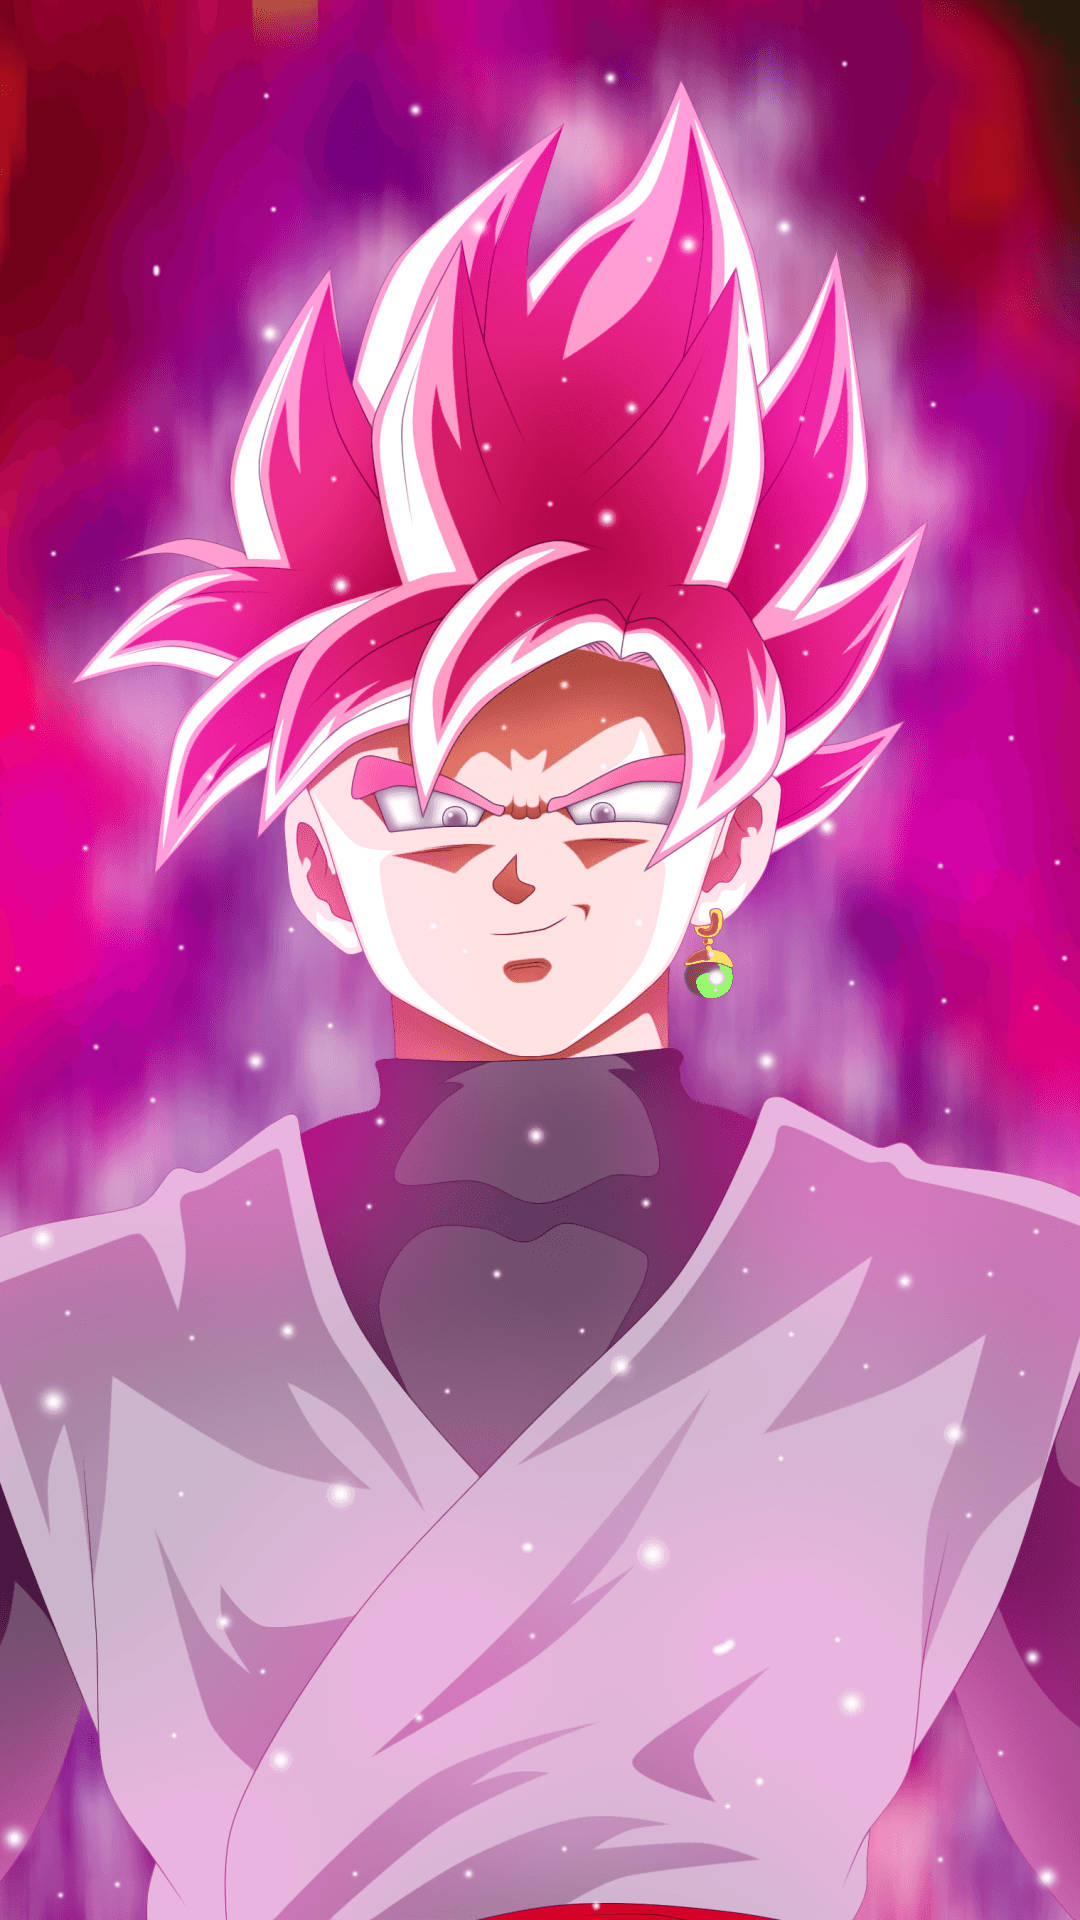 Black Goku With Glowing Pink Hair